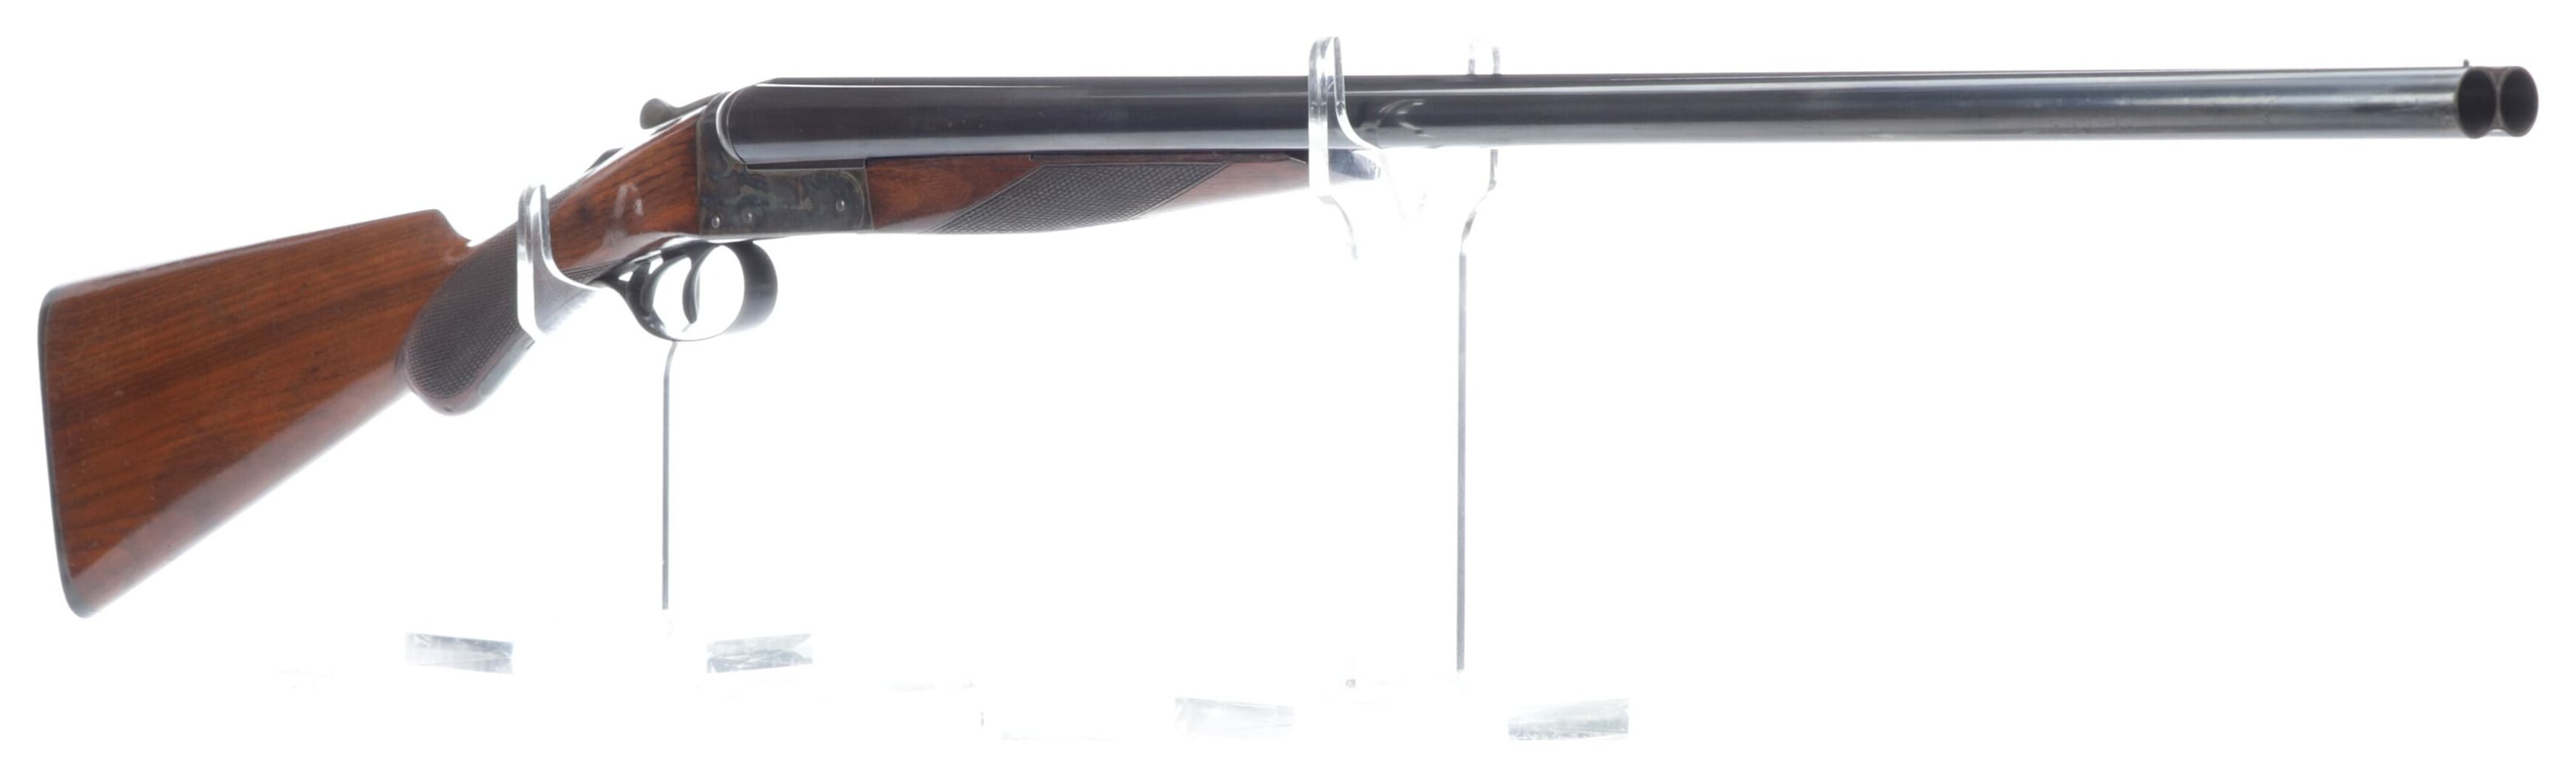 REMINGTON Model 1900 SXS SHOTGUN 12G Ilion NY HAMMERLESS KD Double